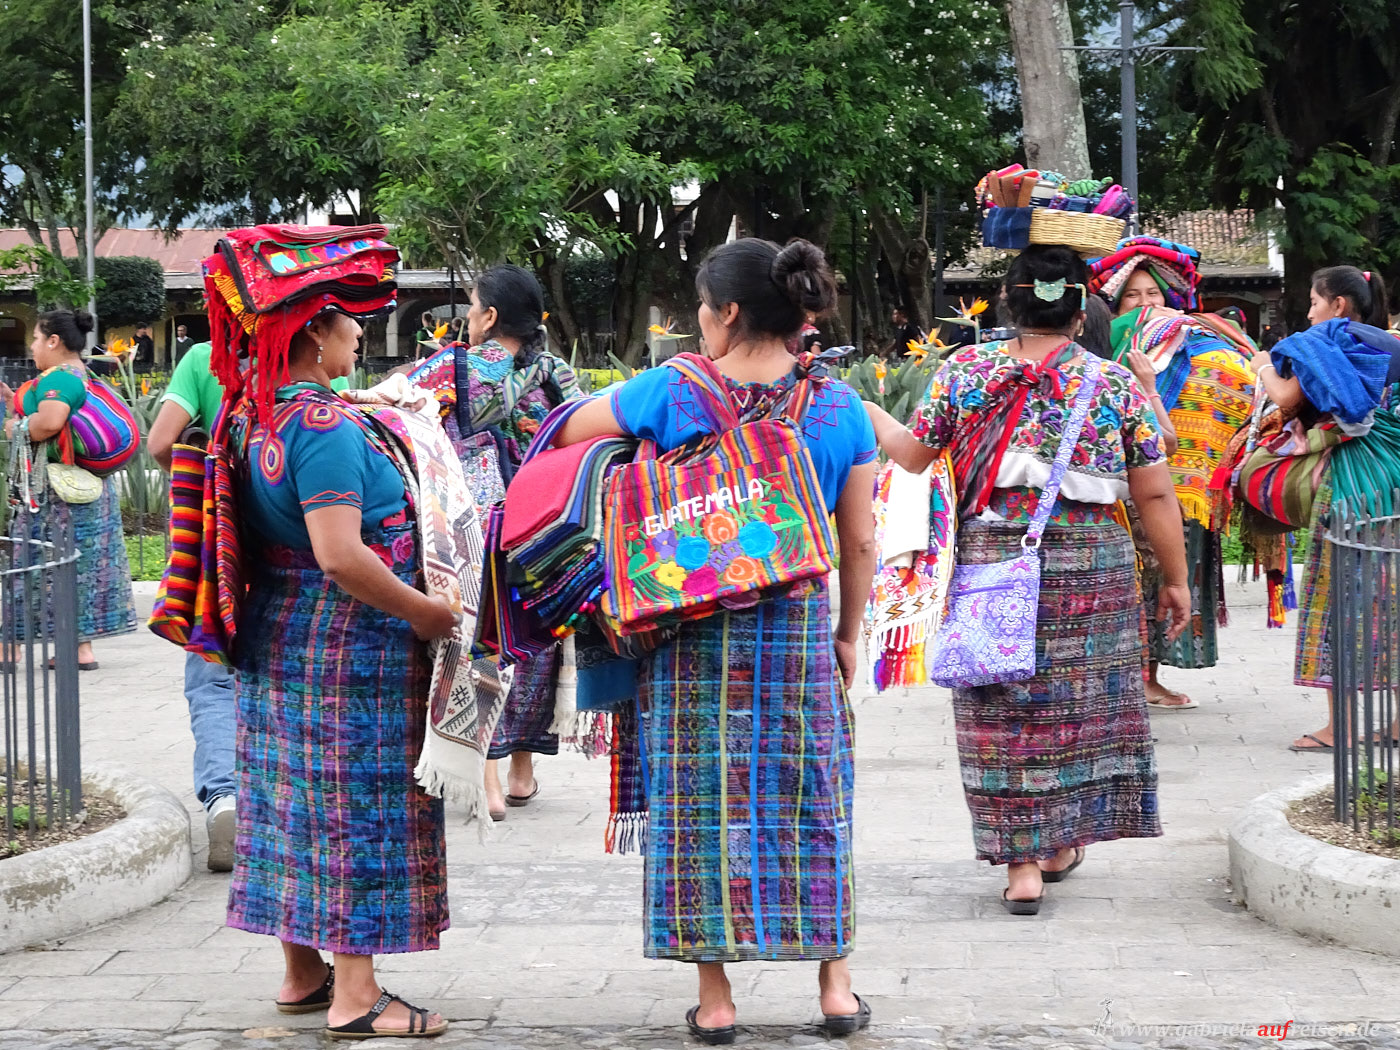 Mayafrauen in Guatemala